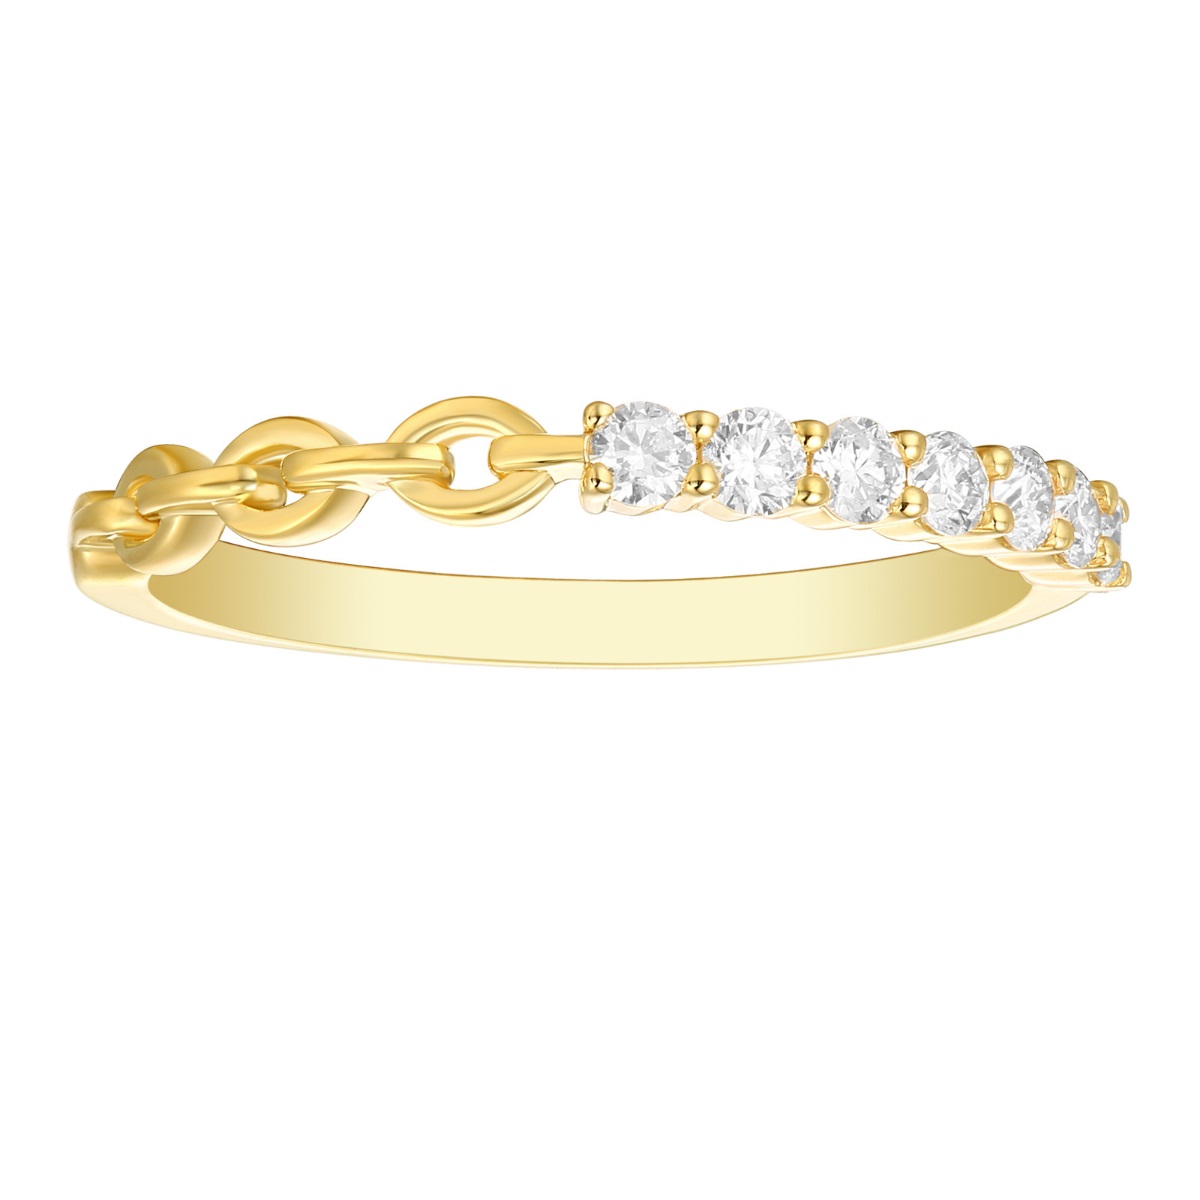 R36696WHT – 18K Yellow Gold  Diamond Ring, 0.27 TCW